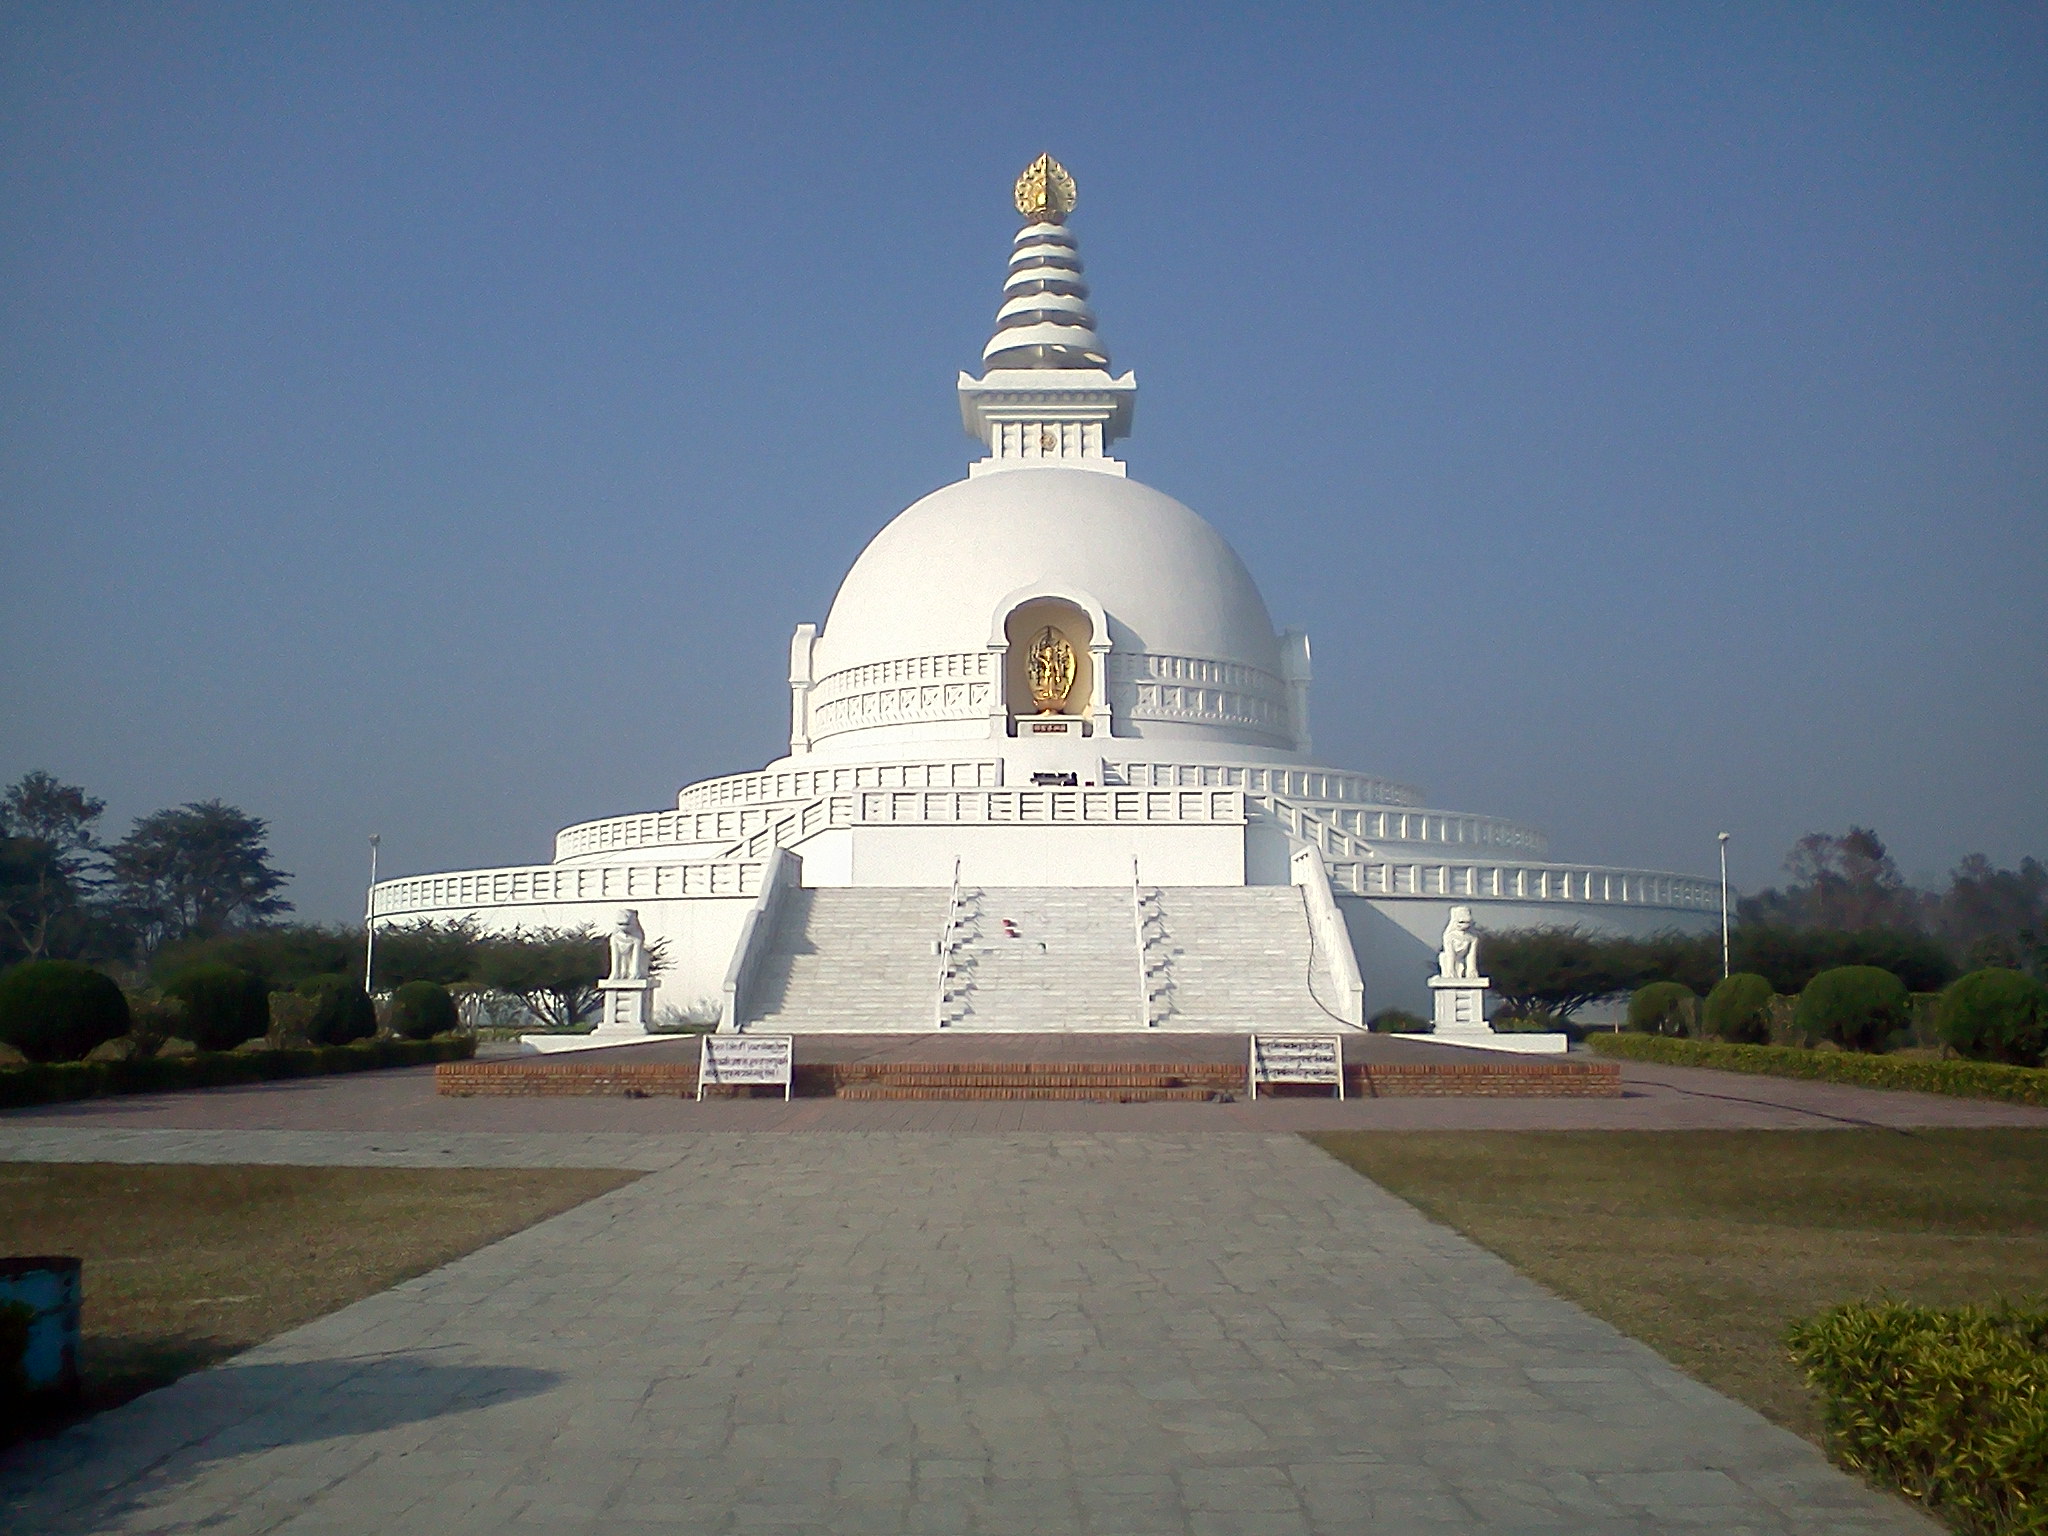 http://maynabelle.files.wordpress.com/2012/01/world-peace-pagoda.jpg